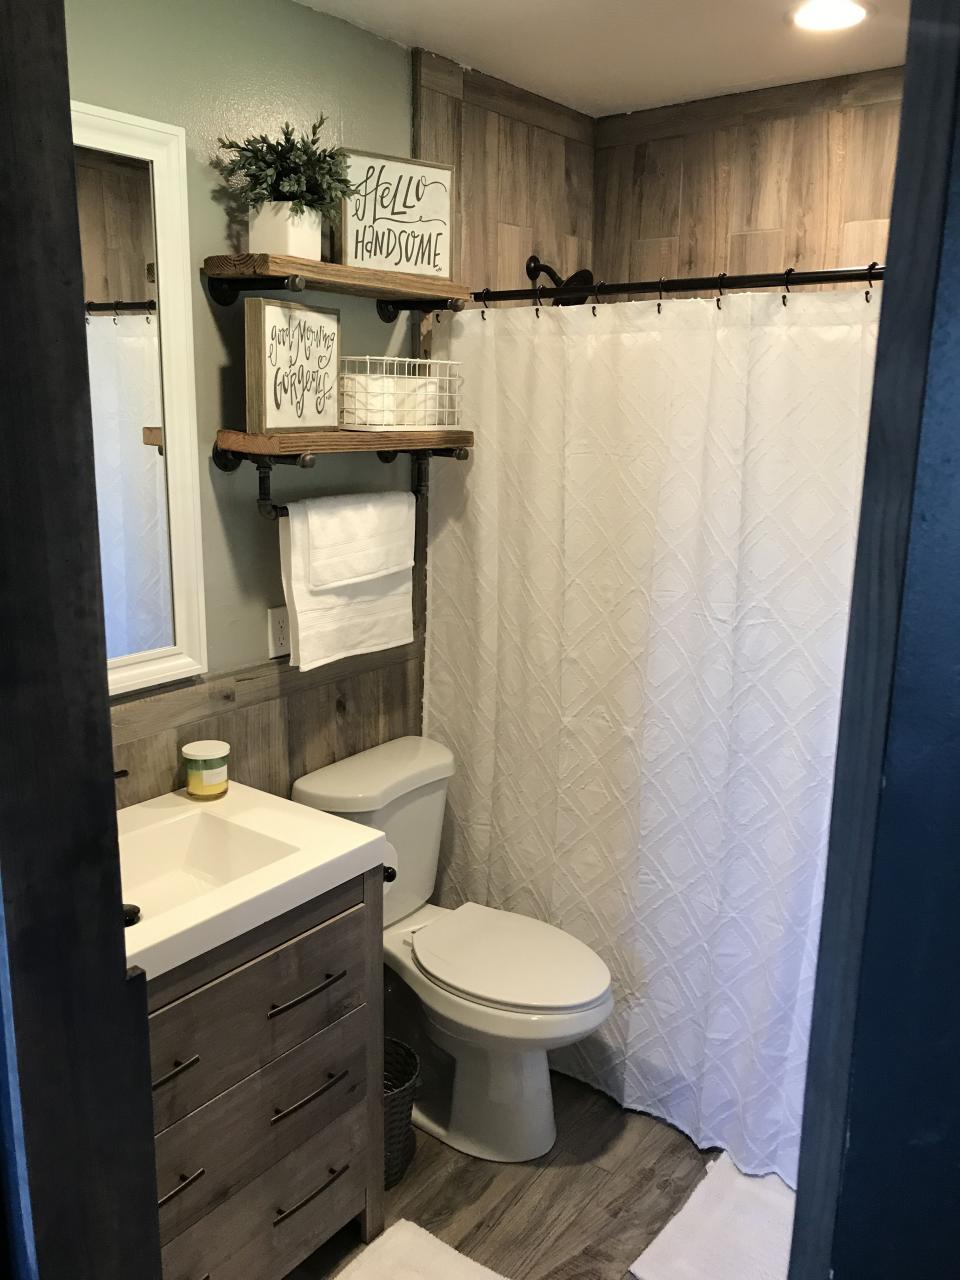 Mens Bathroom Decor 2020 in 2020 Mens bathroom decor, Restroom decor